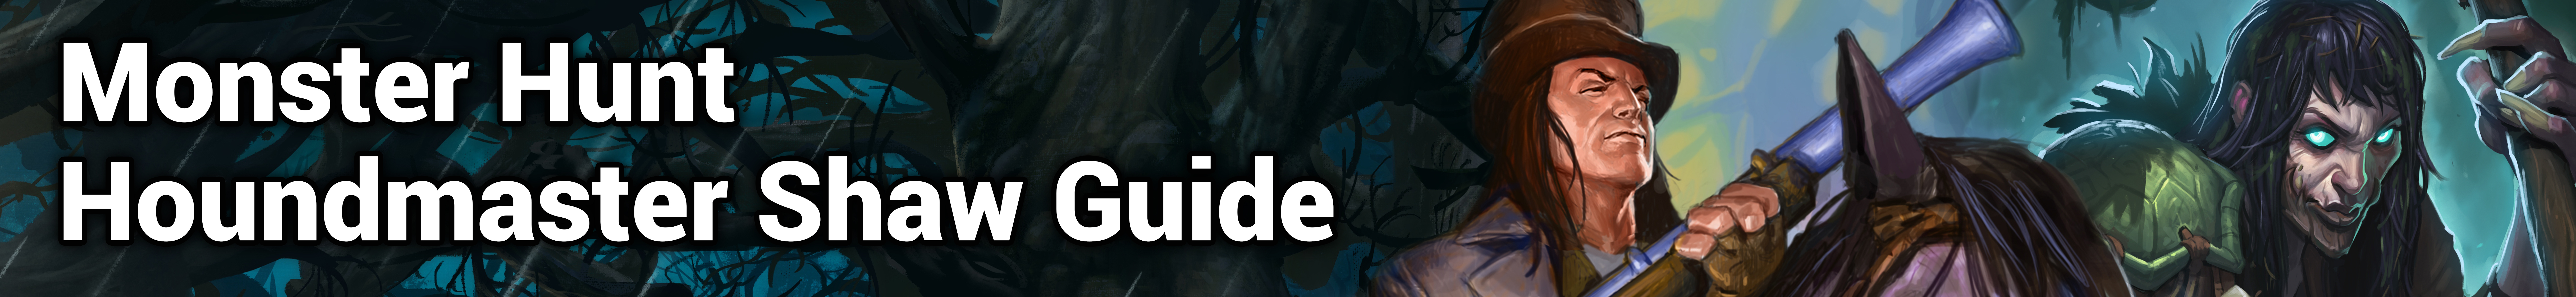 Monster Hunt Houndmaster Shaw Guide - Guides - HearthPwn